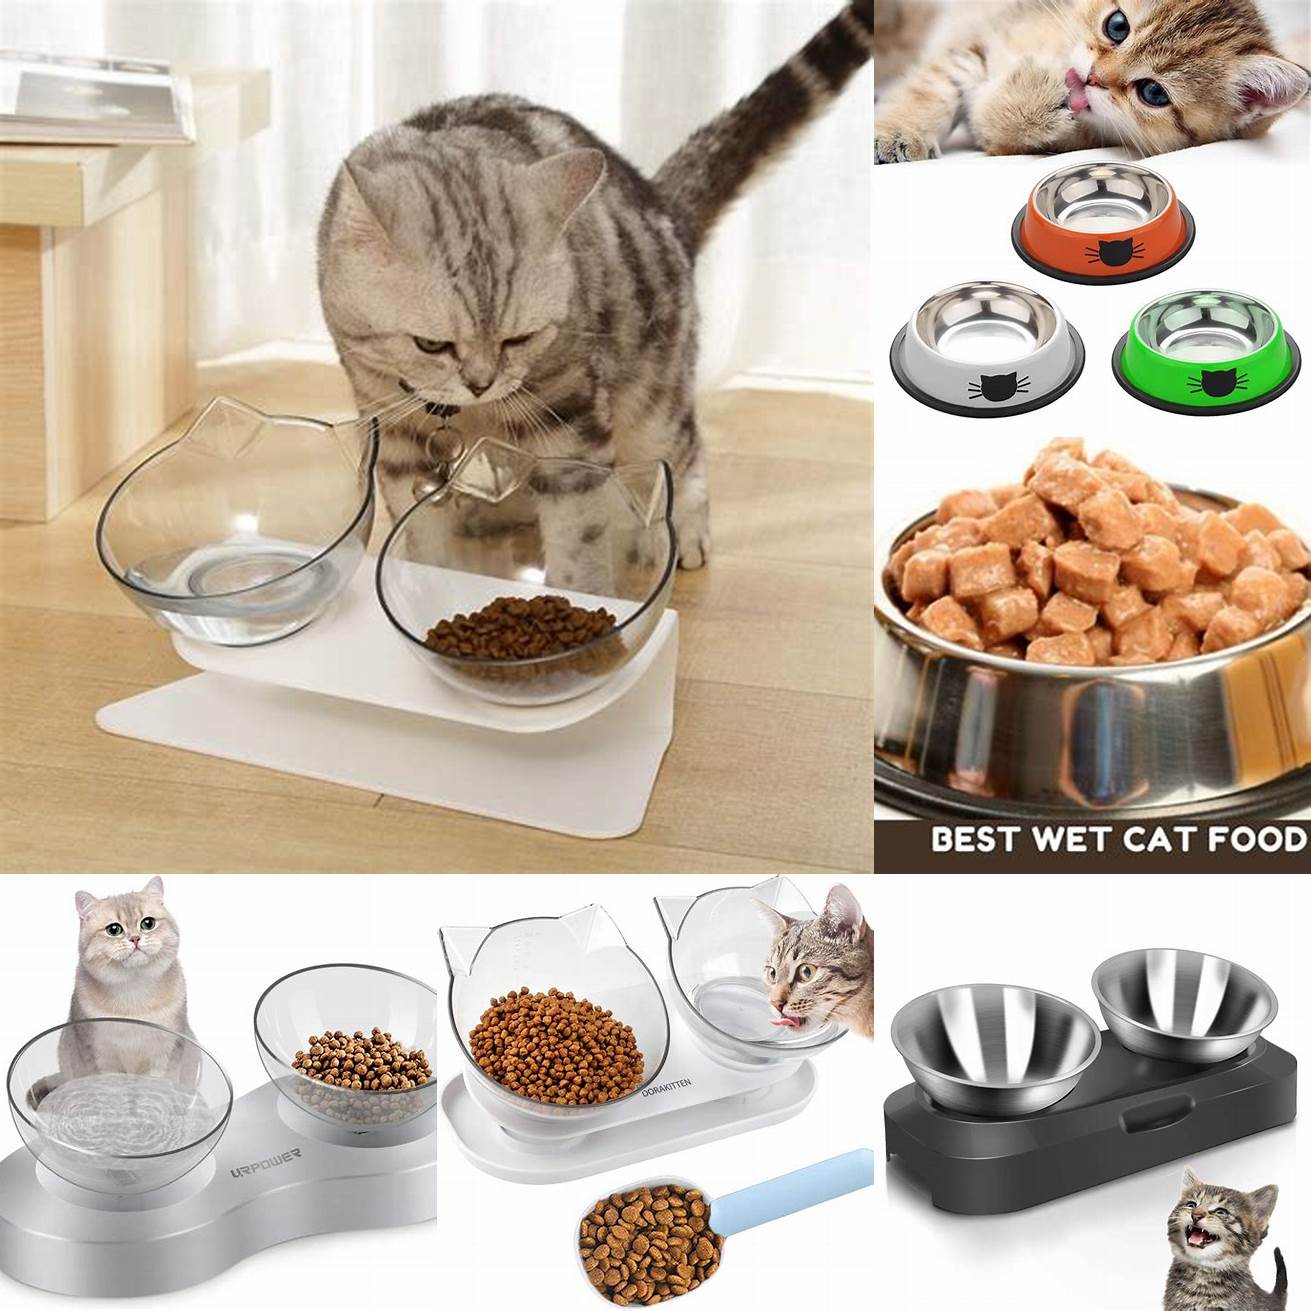 Bowl of wet cat food